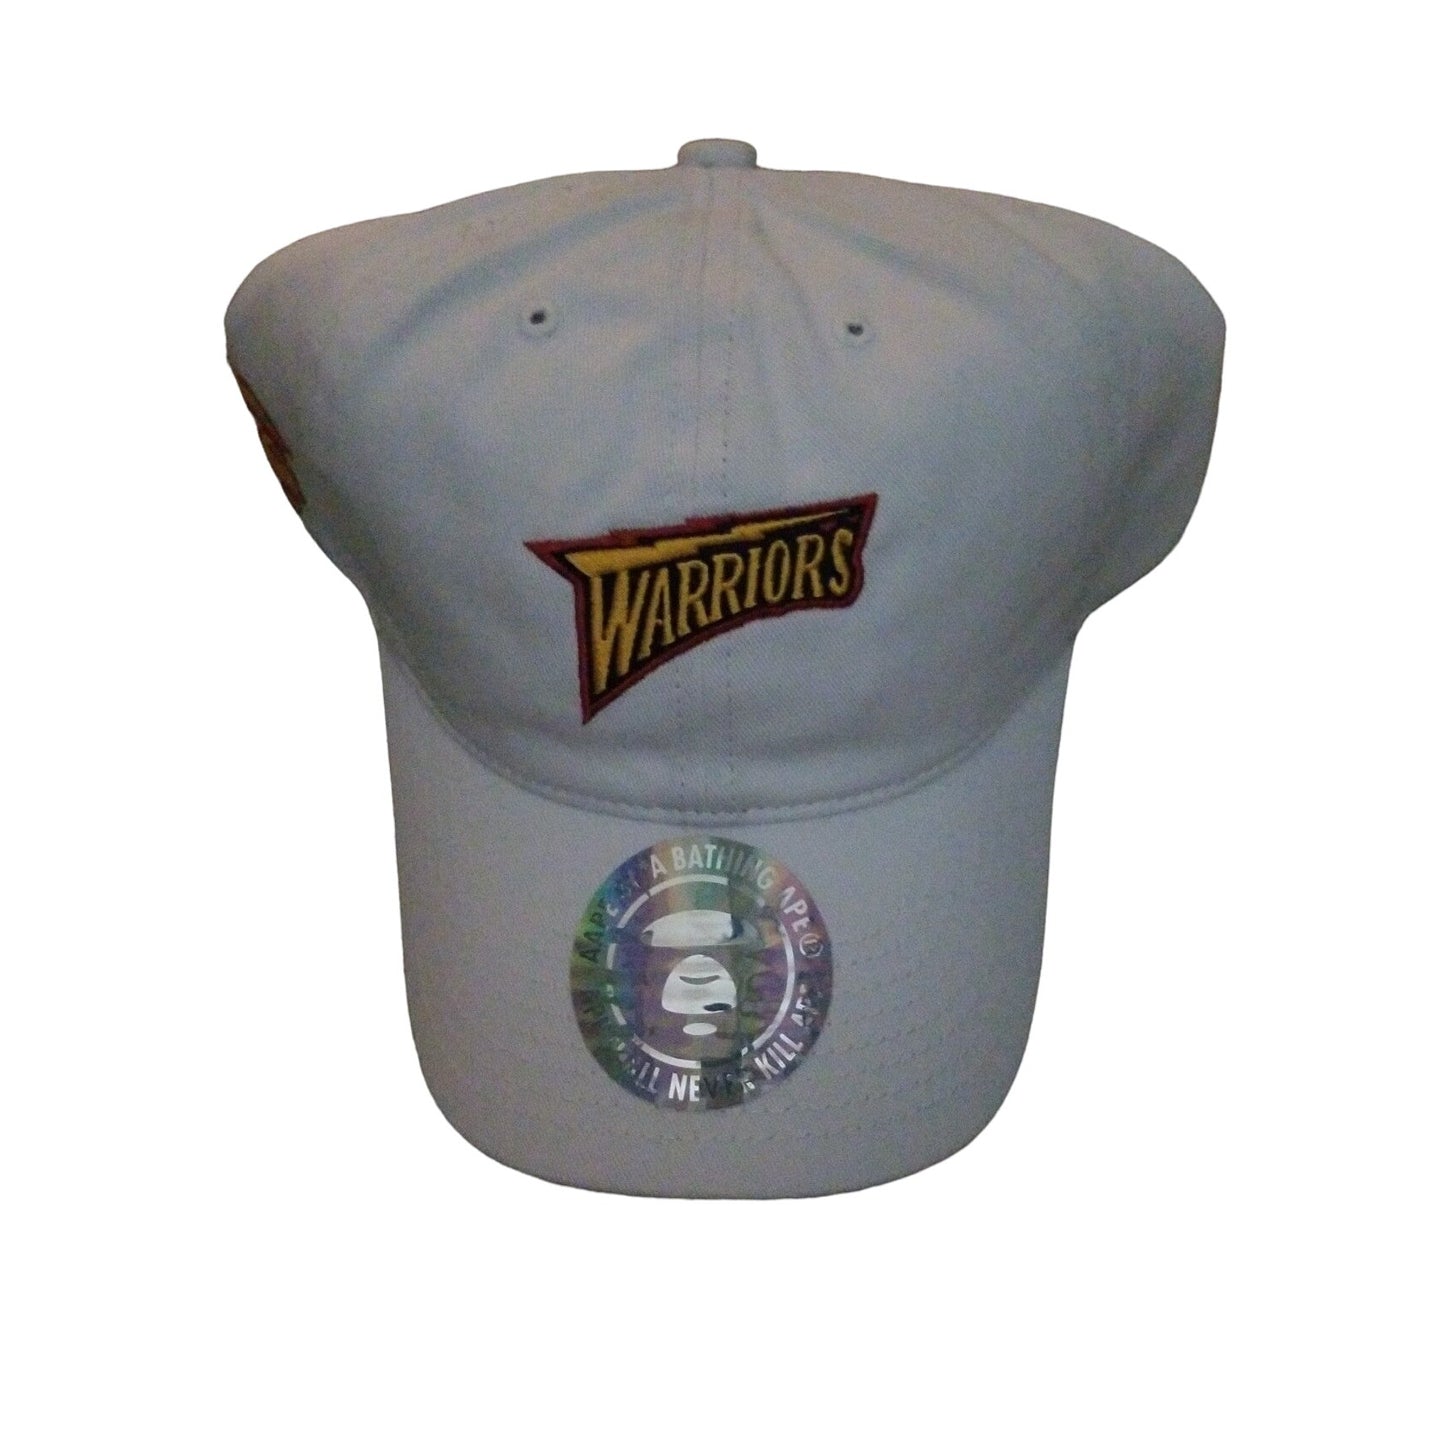 RARE: Bape x Mitchell & Ness Warriors Strapback Hat Collab